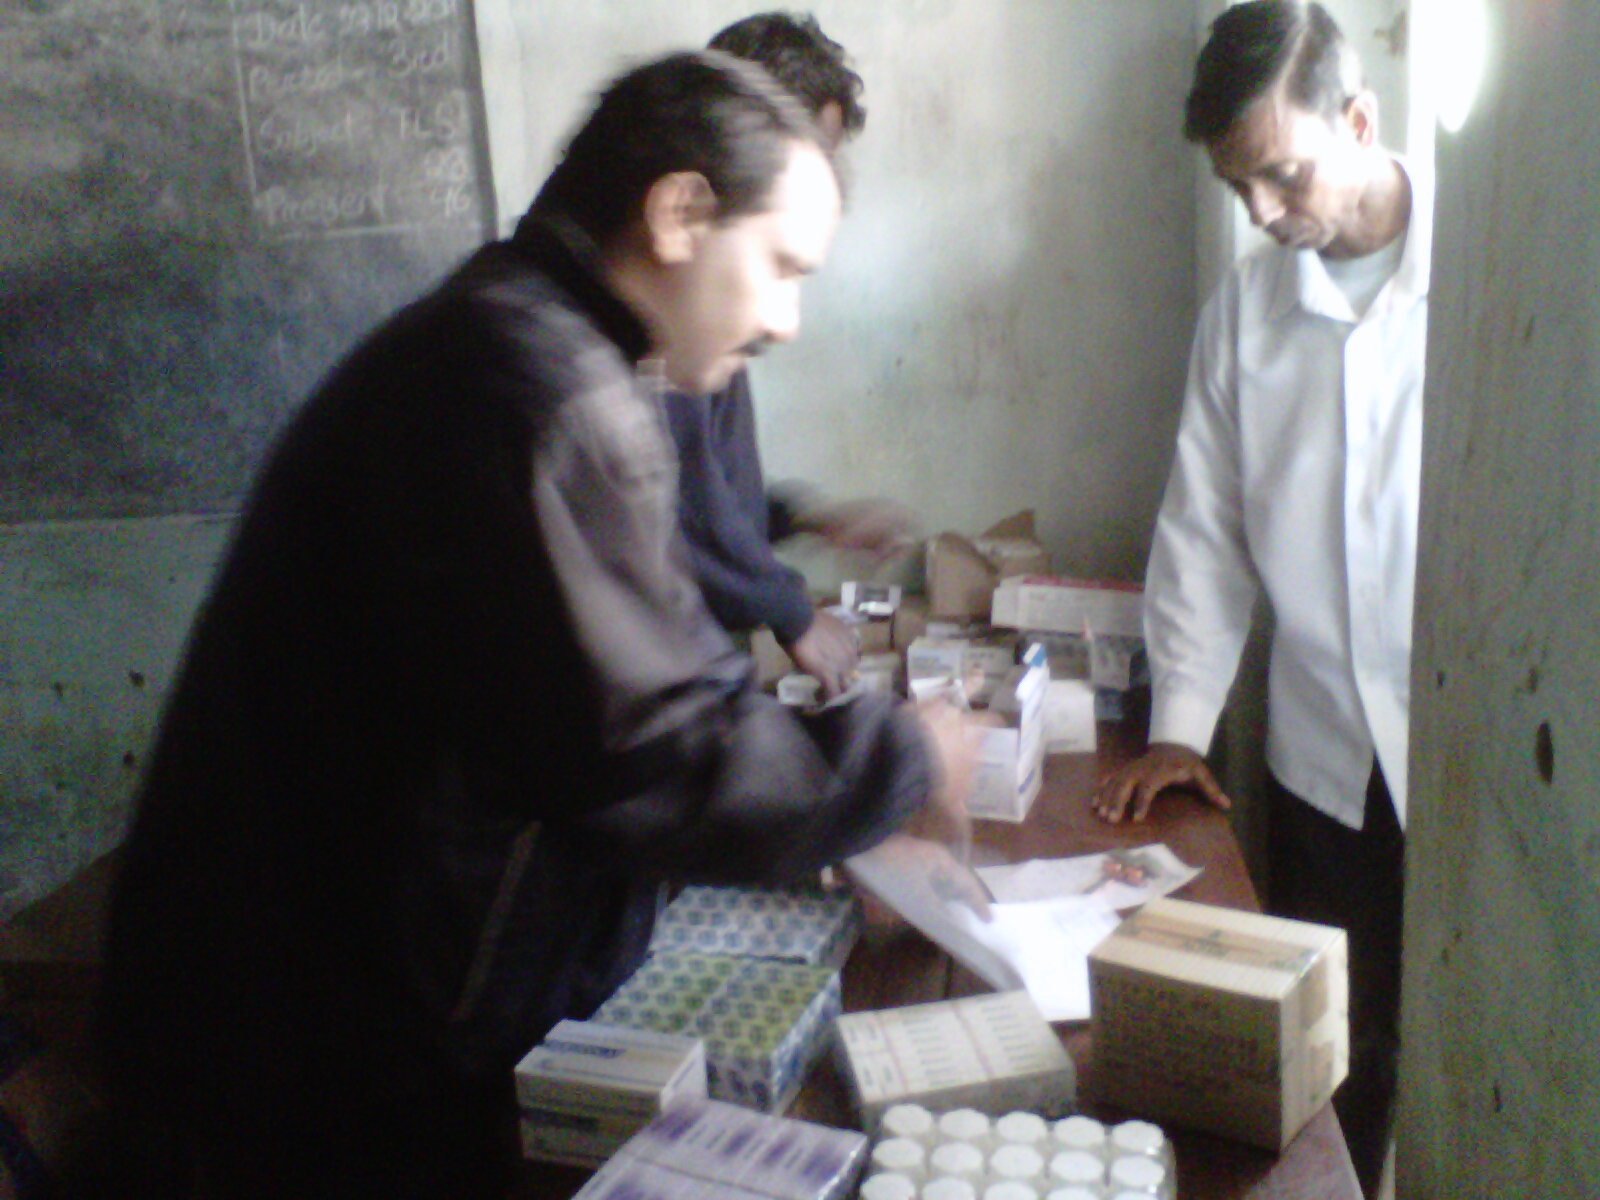 Medical representatives distributing medicines free of cost